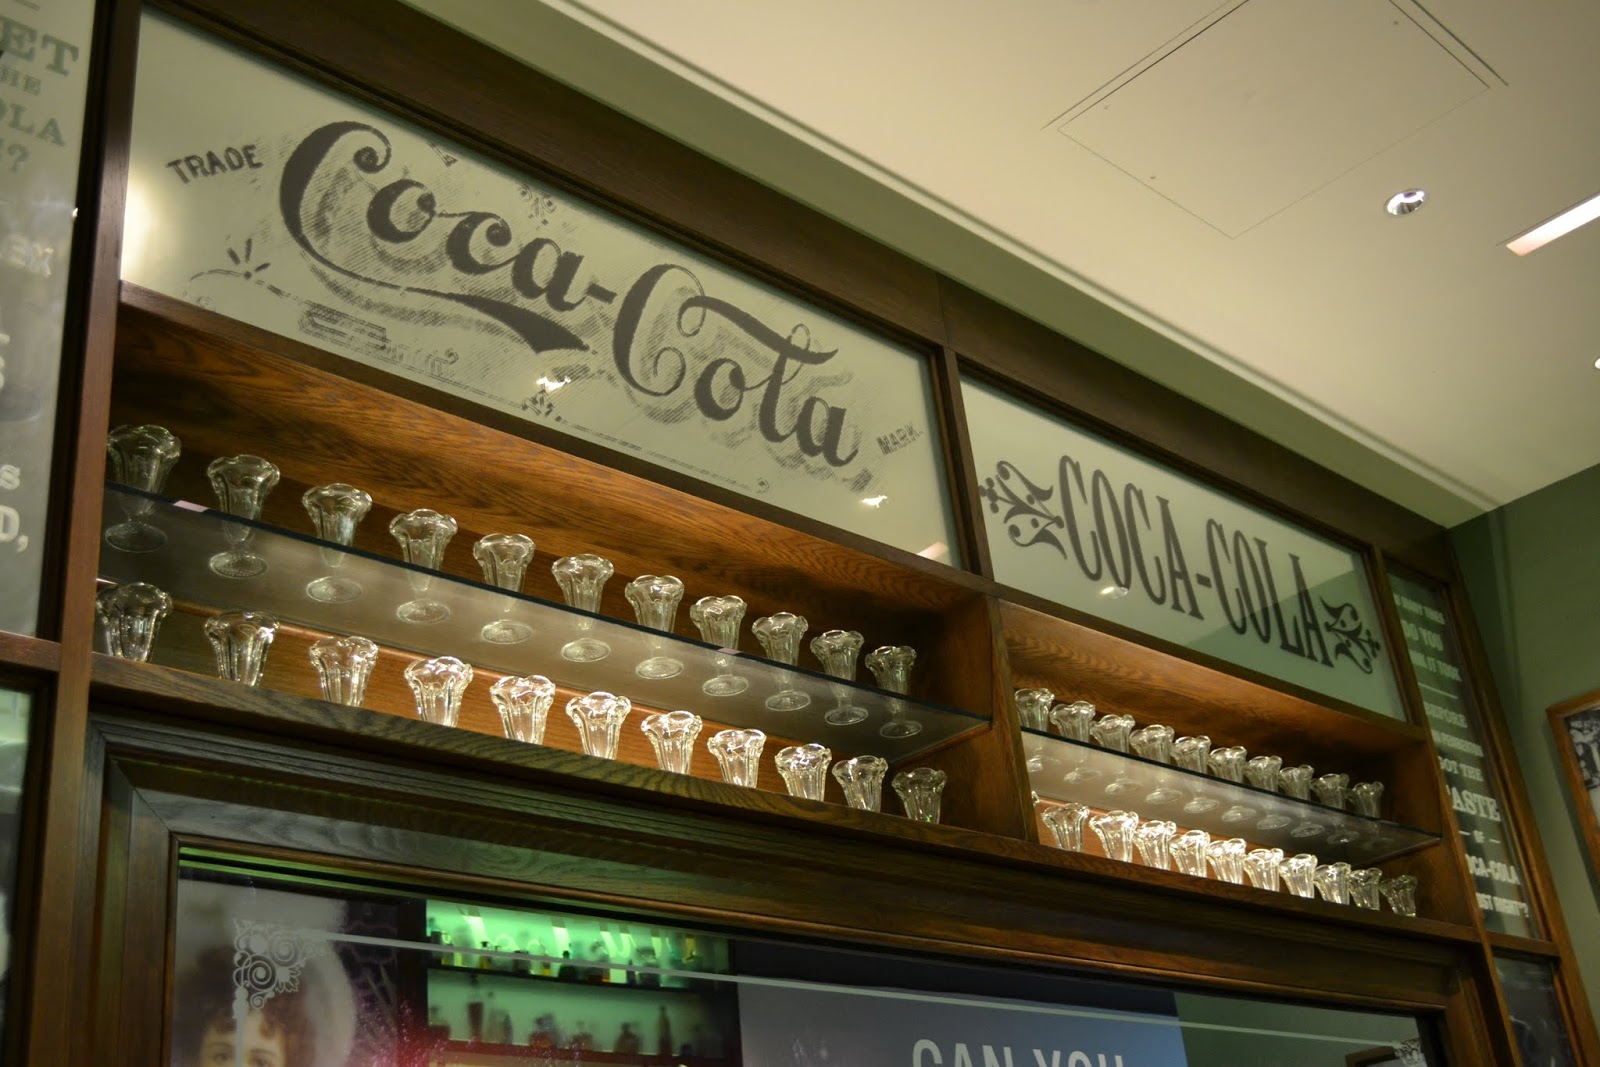 Музей Кока-Колы, Атланта (World of Coca-Cola, Atlanta, GA)